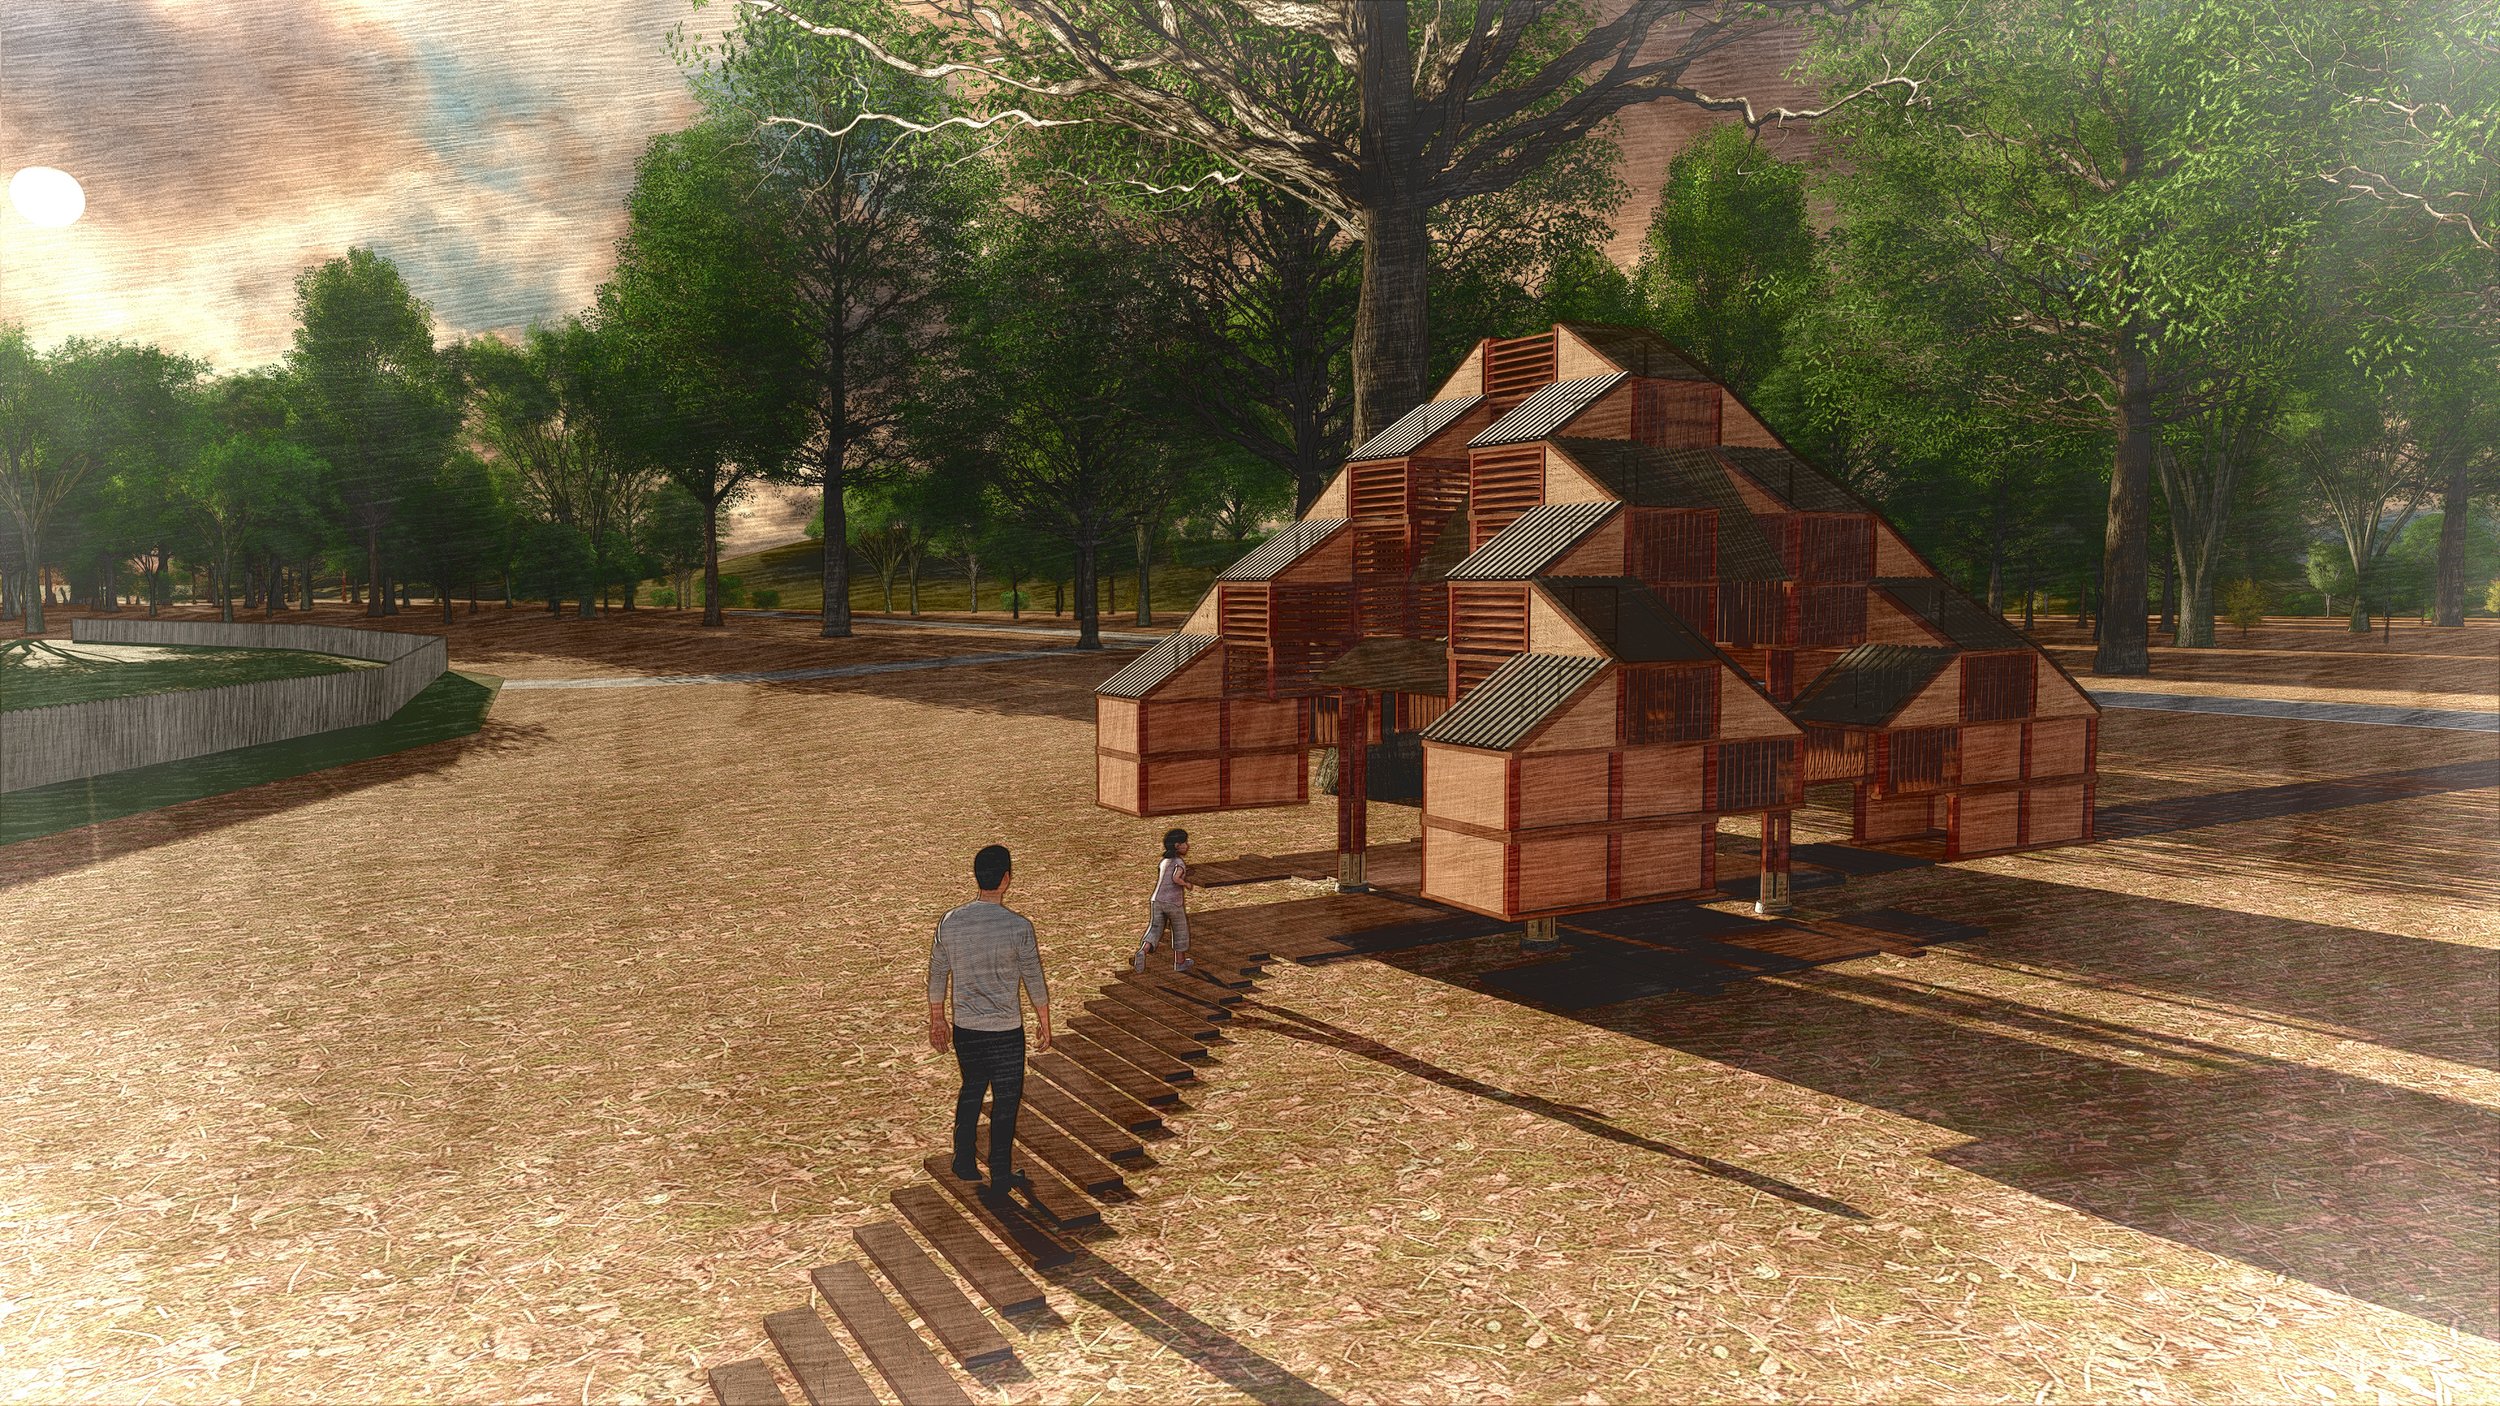 Timber Pavilion